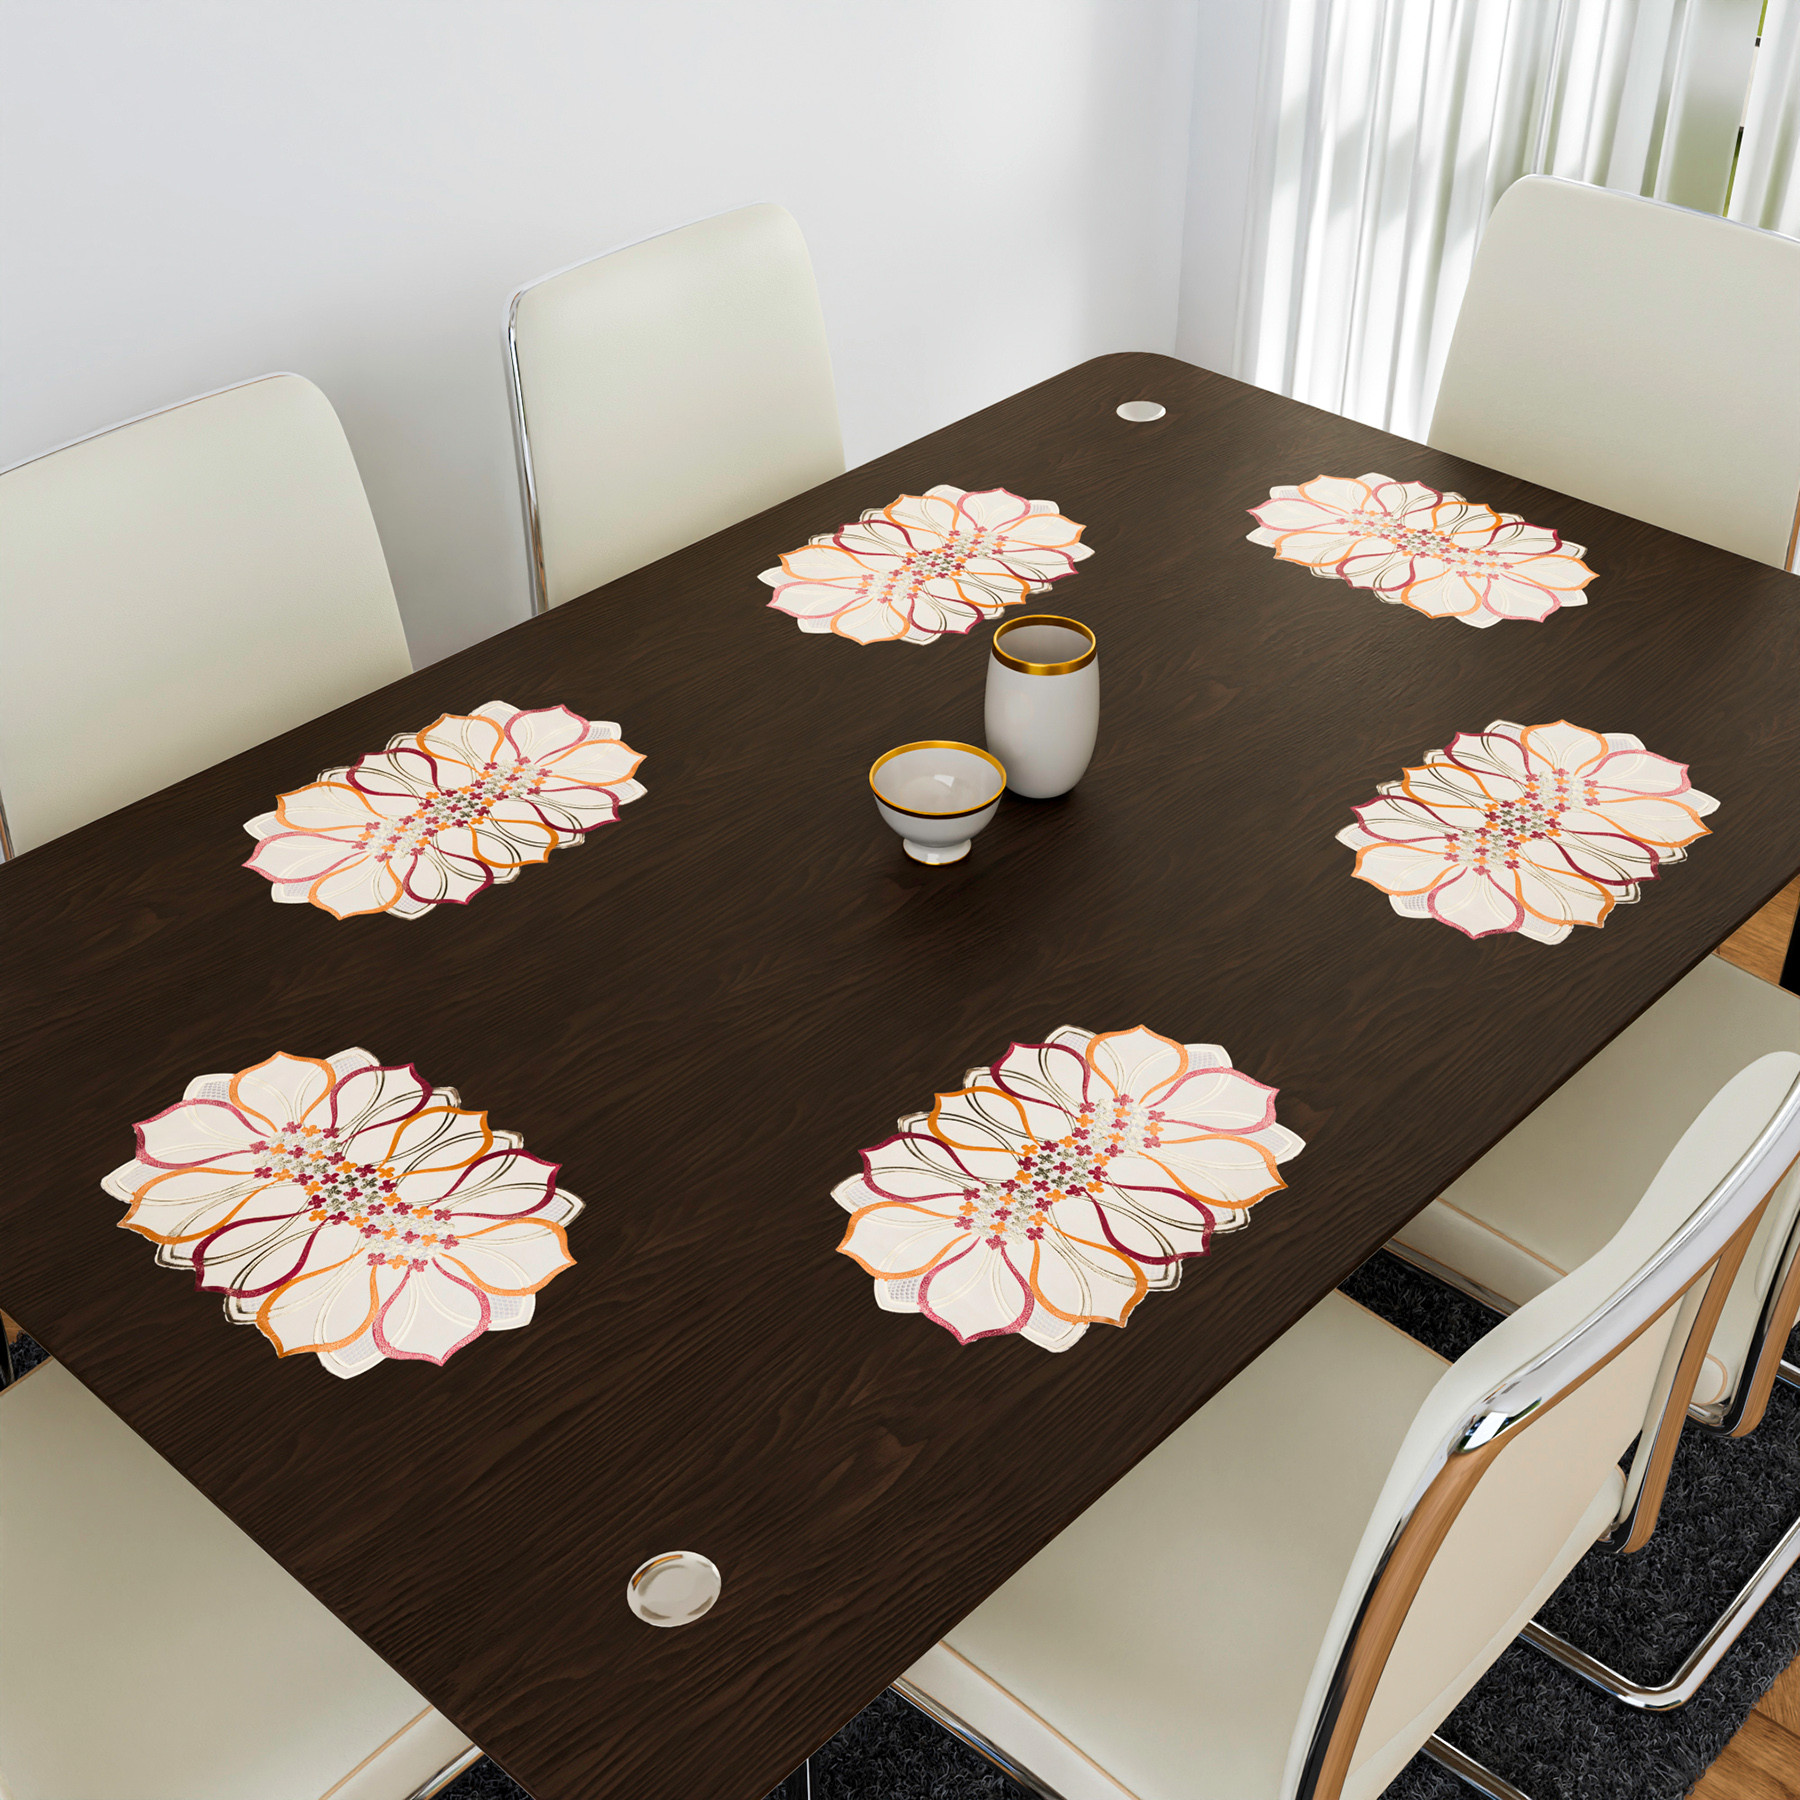 Kuber Industries Placemats | Placemats for Dining Table | Placemats for Kitchen | Table Placemats | Table Runner Mat | Multi Leaf Placemats | Dinner Mat | 6 Piece Set | Golden